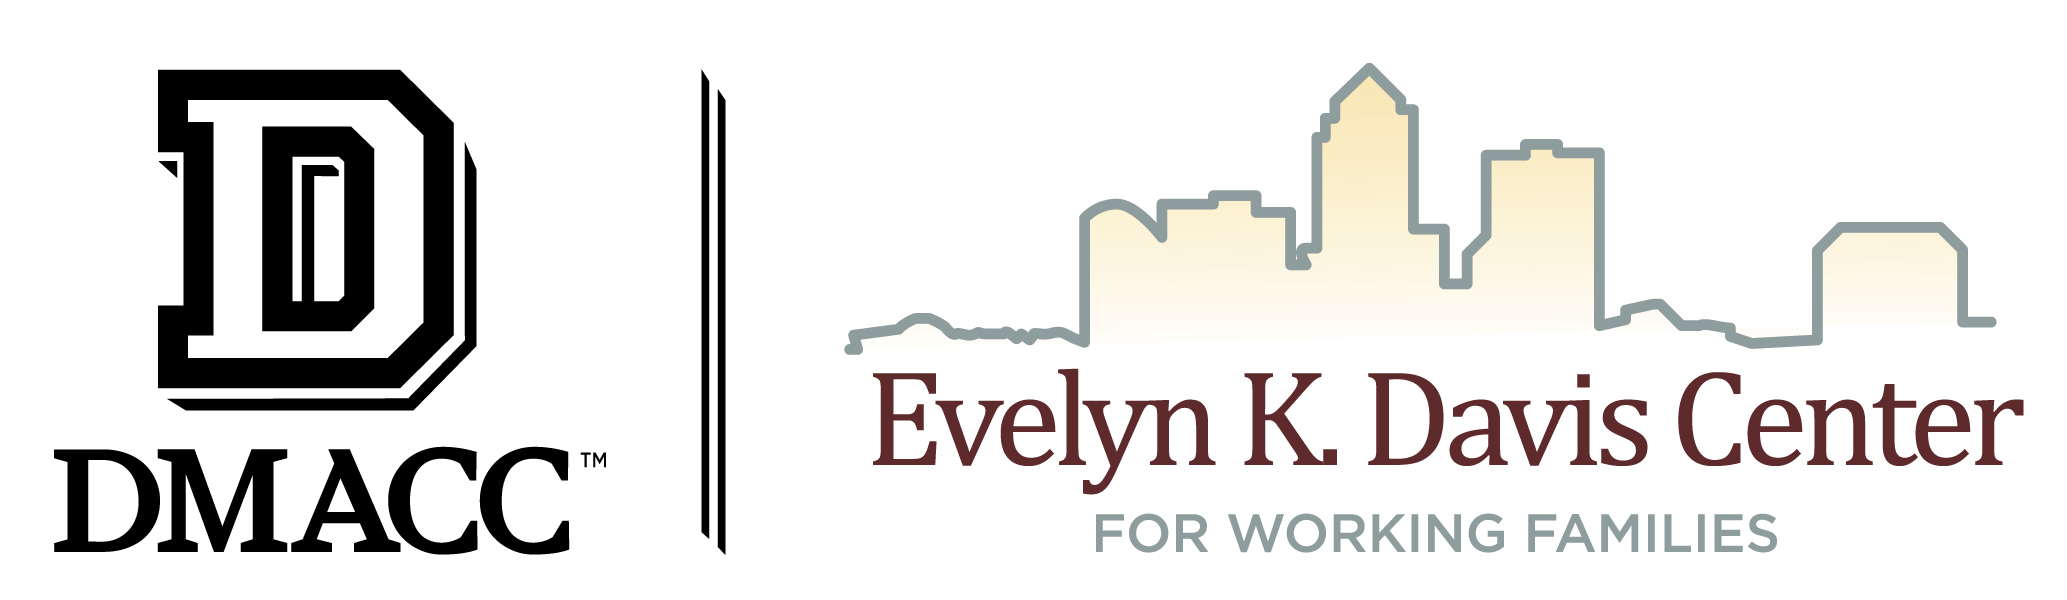 EKDC logo